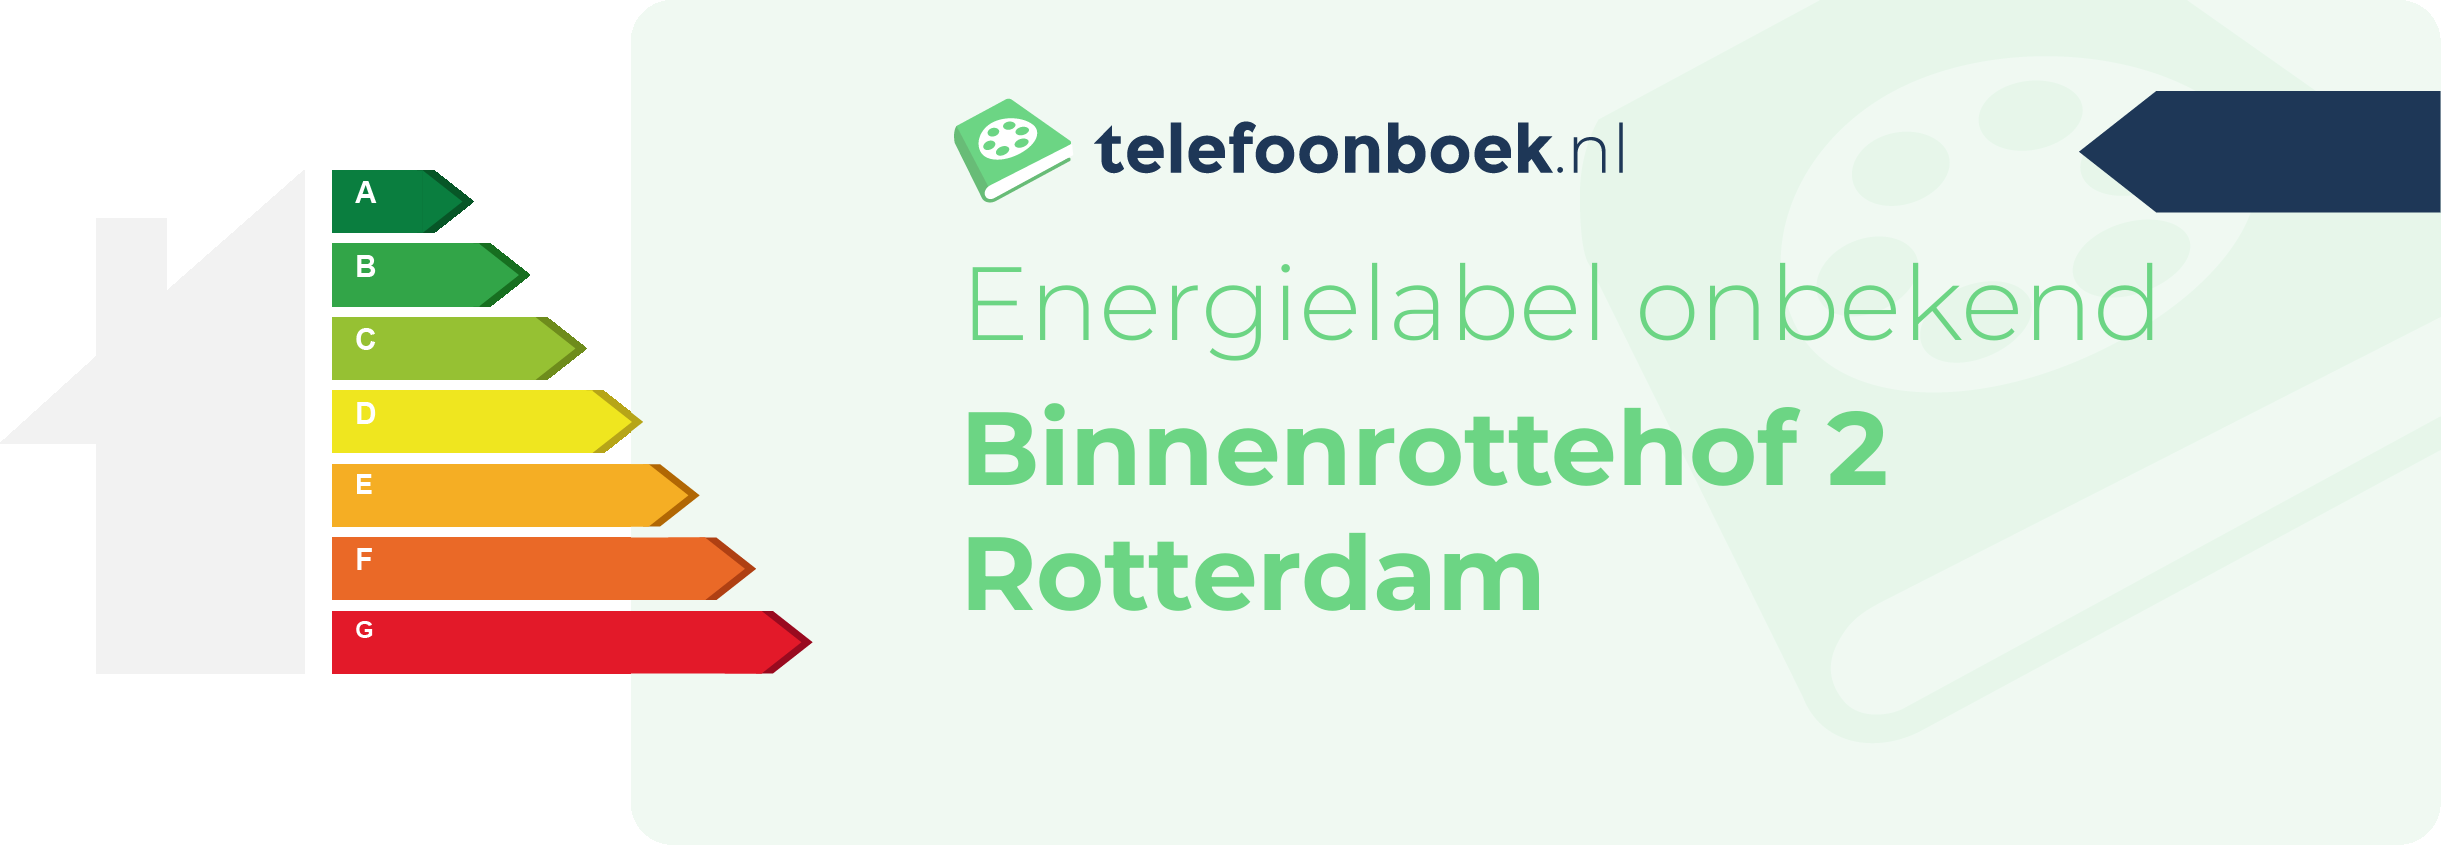 Energielabel Binnenrottehof 2 Rotterdam